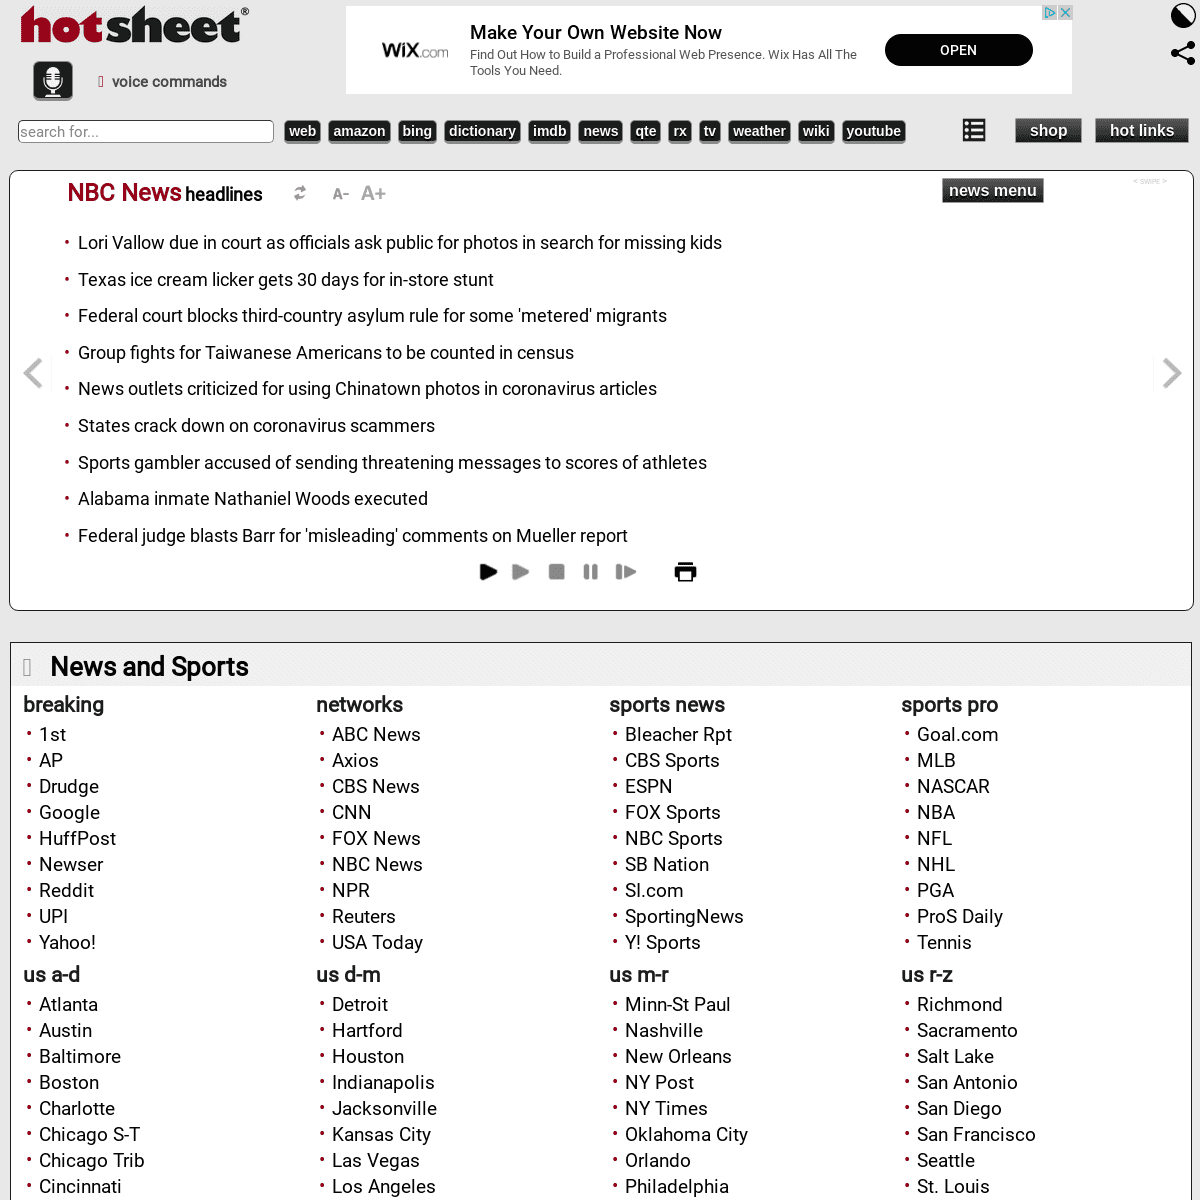 A complete backup of hotsheet.com